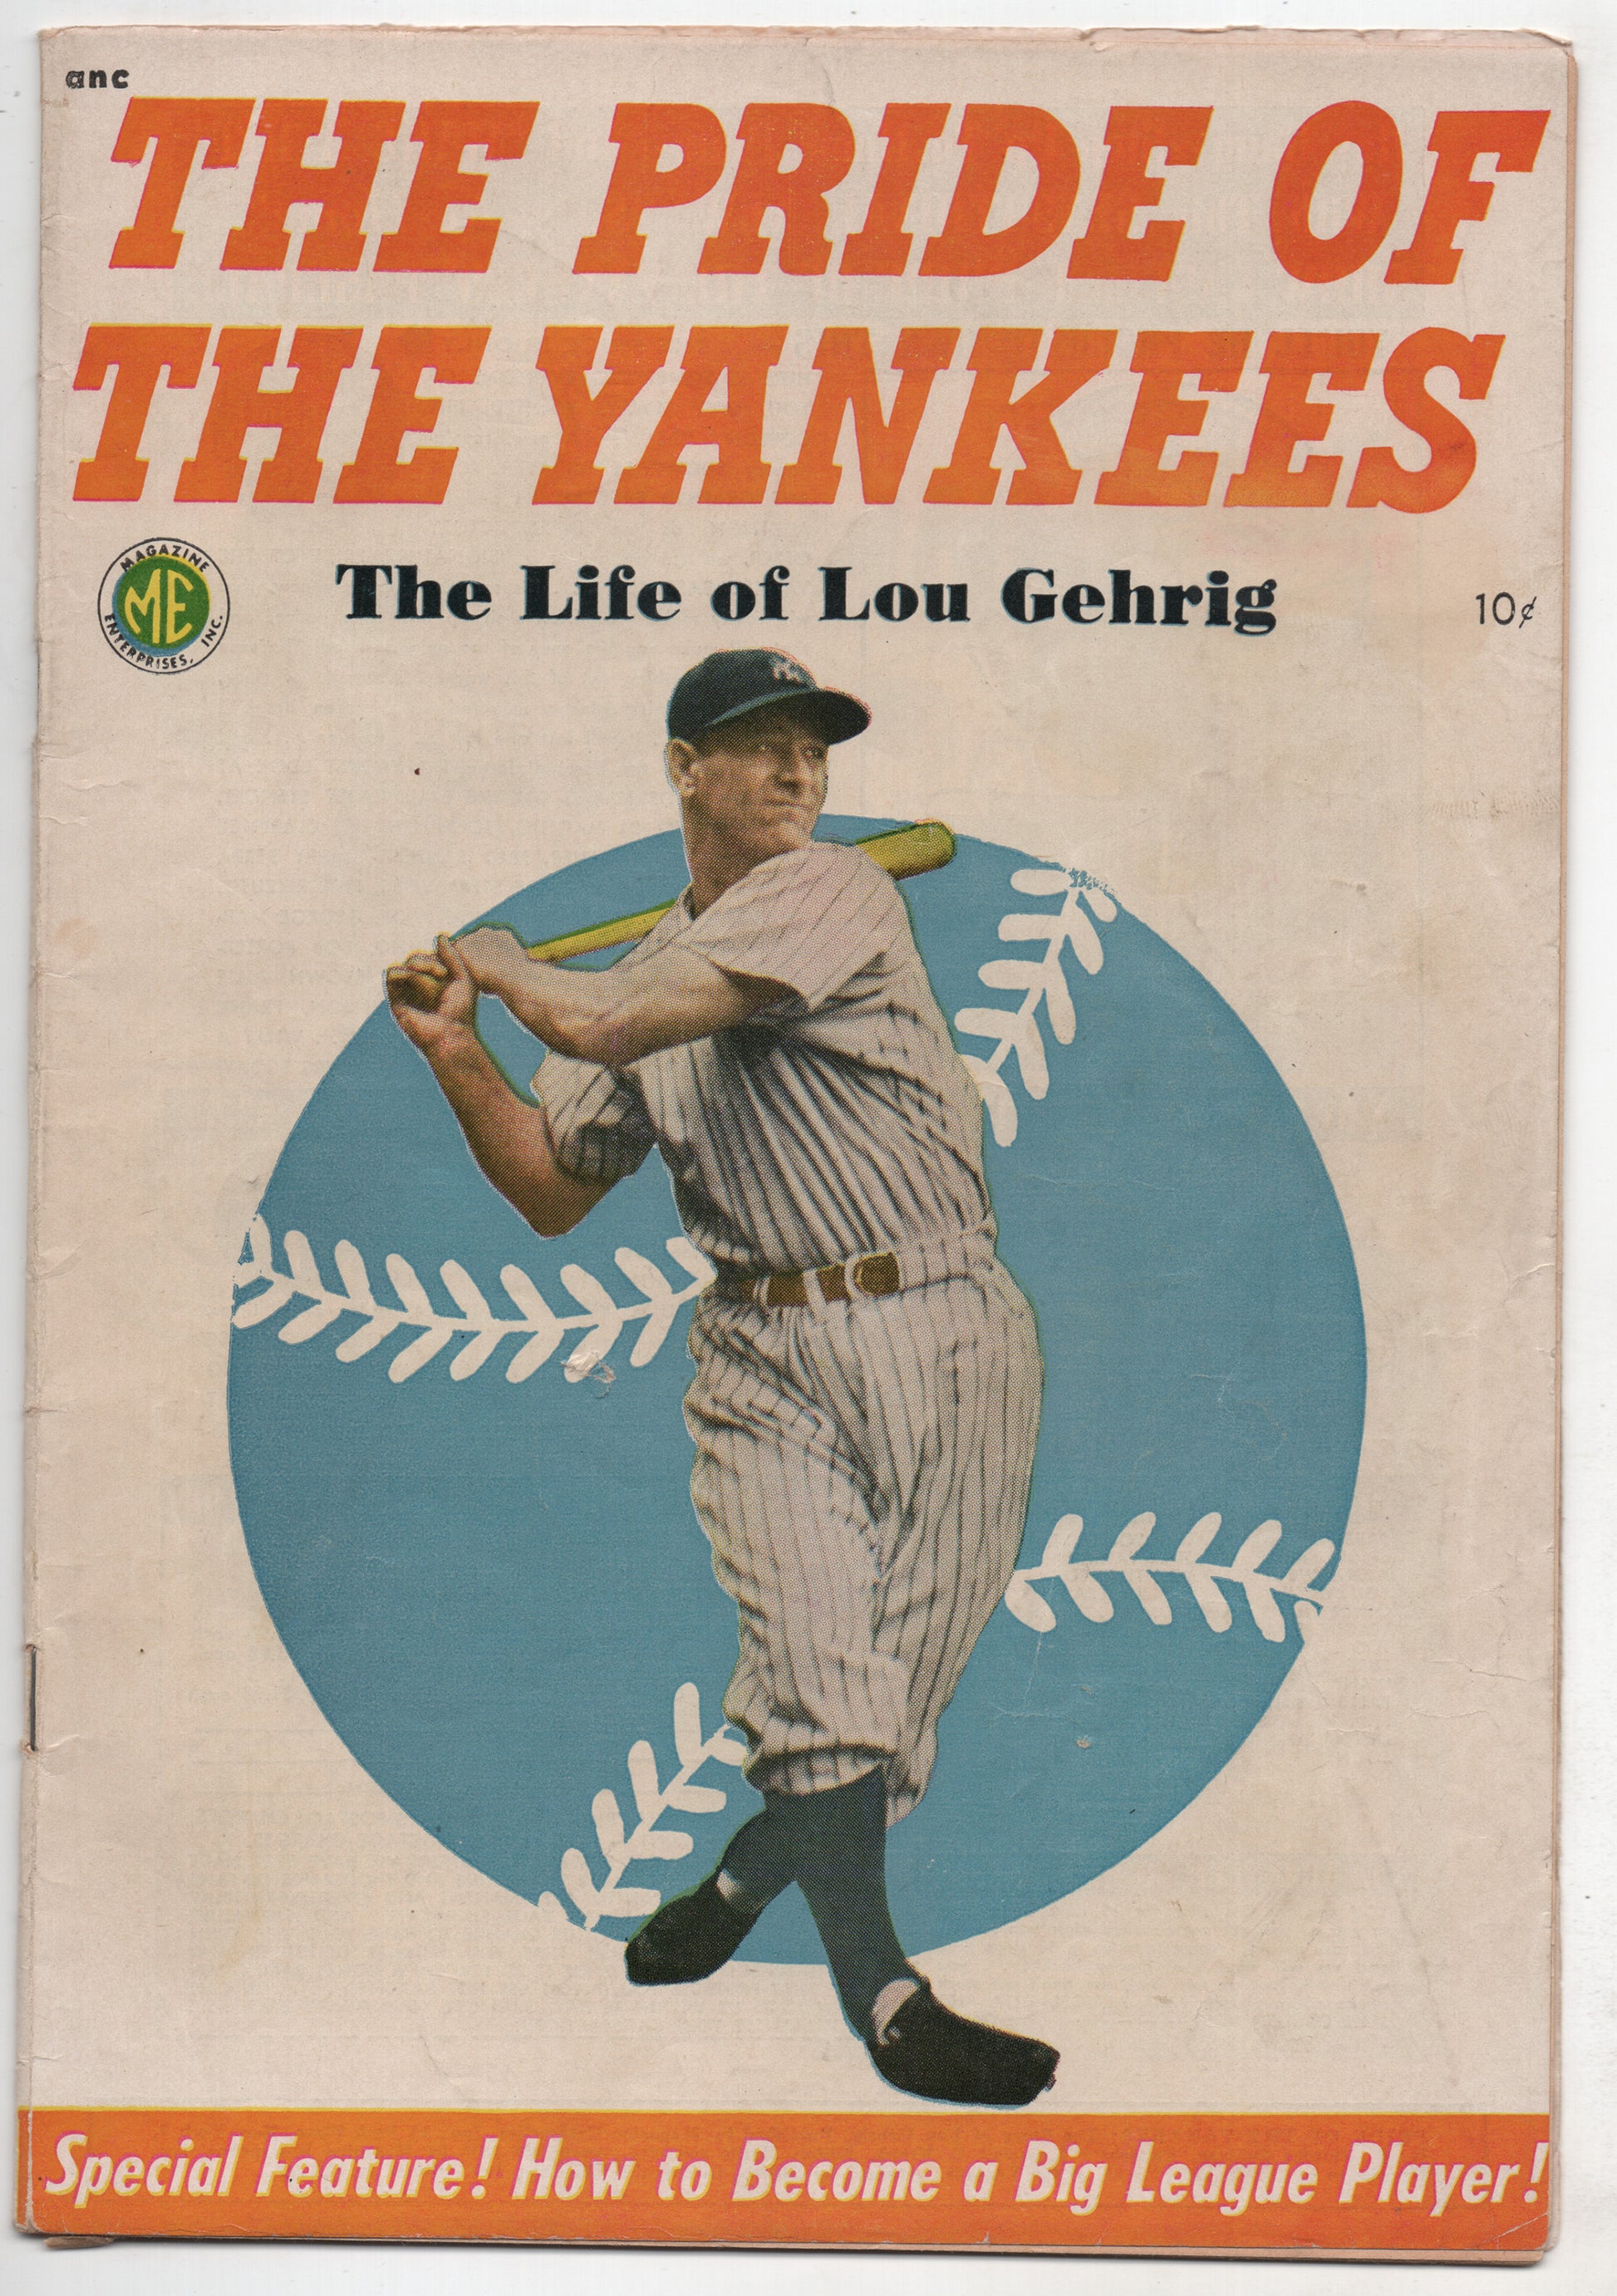 Lou Gehrig Baseball Card by Vintage Baseball Posters